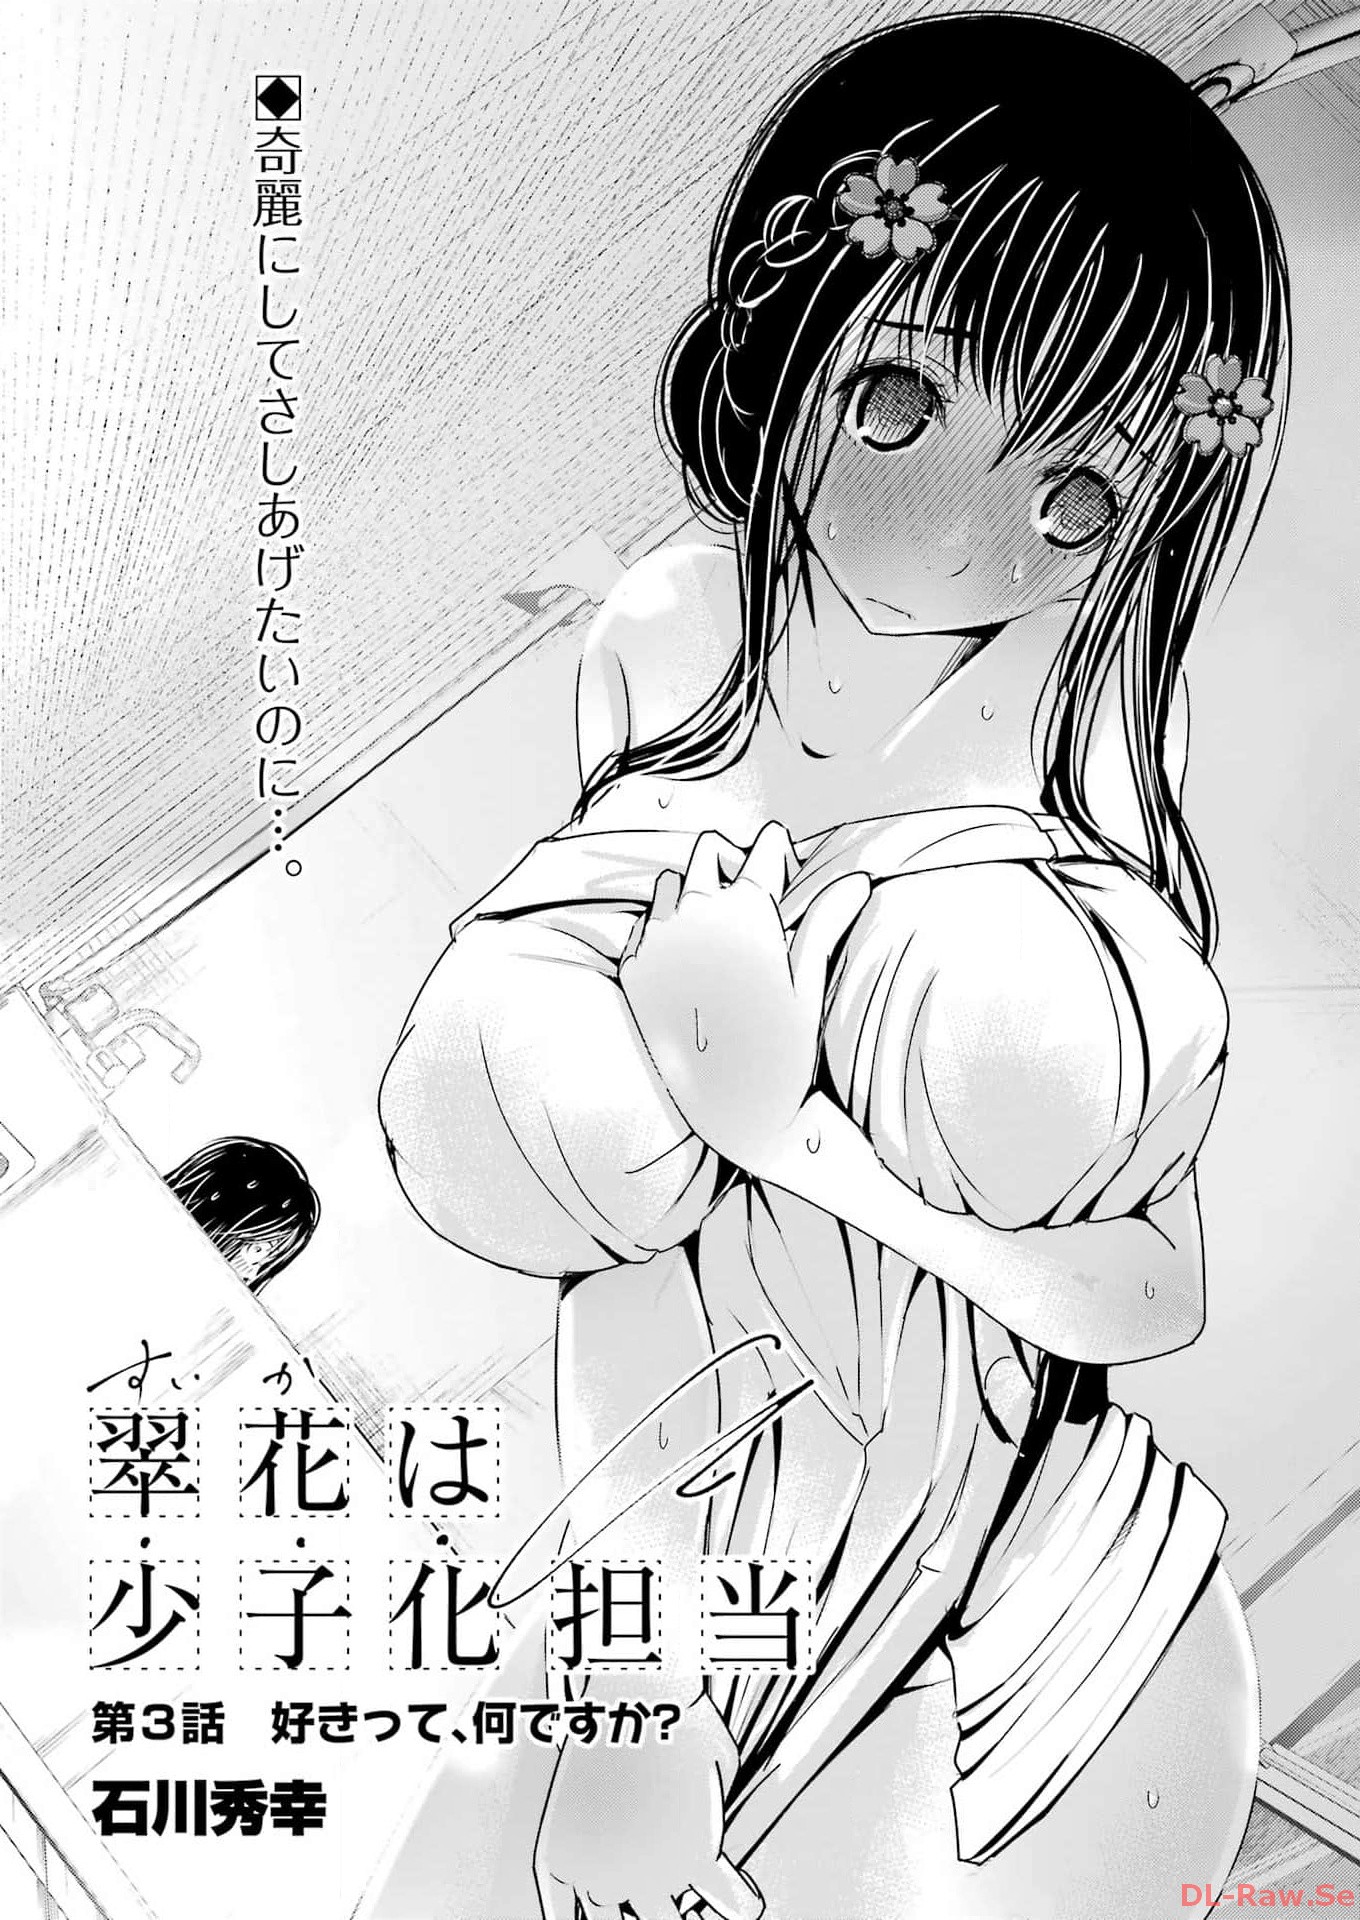 Suika wa Shoushika Tantou - Chapter 3 - Page 2